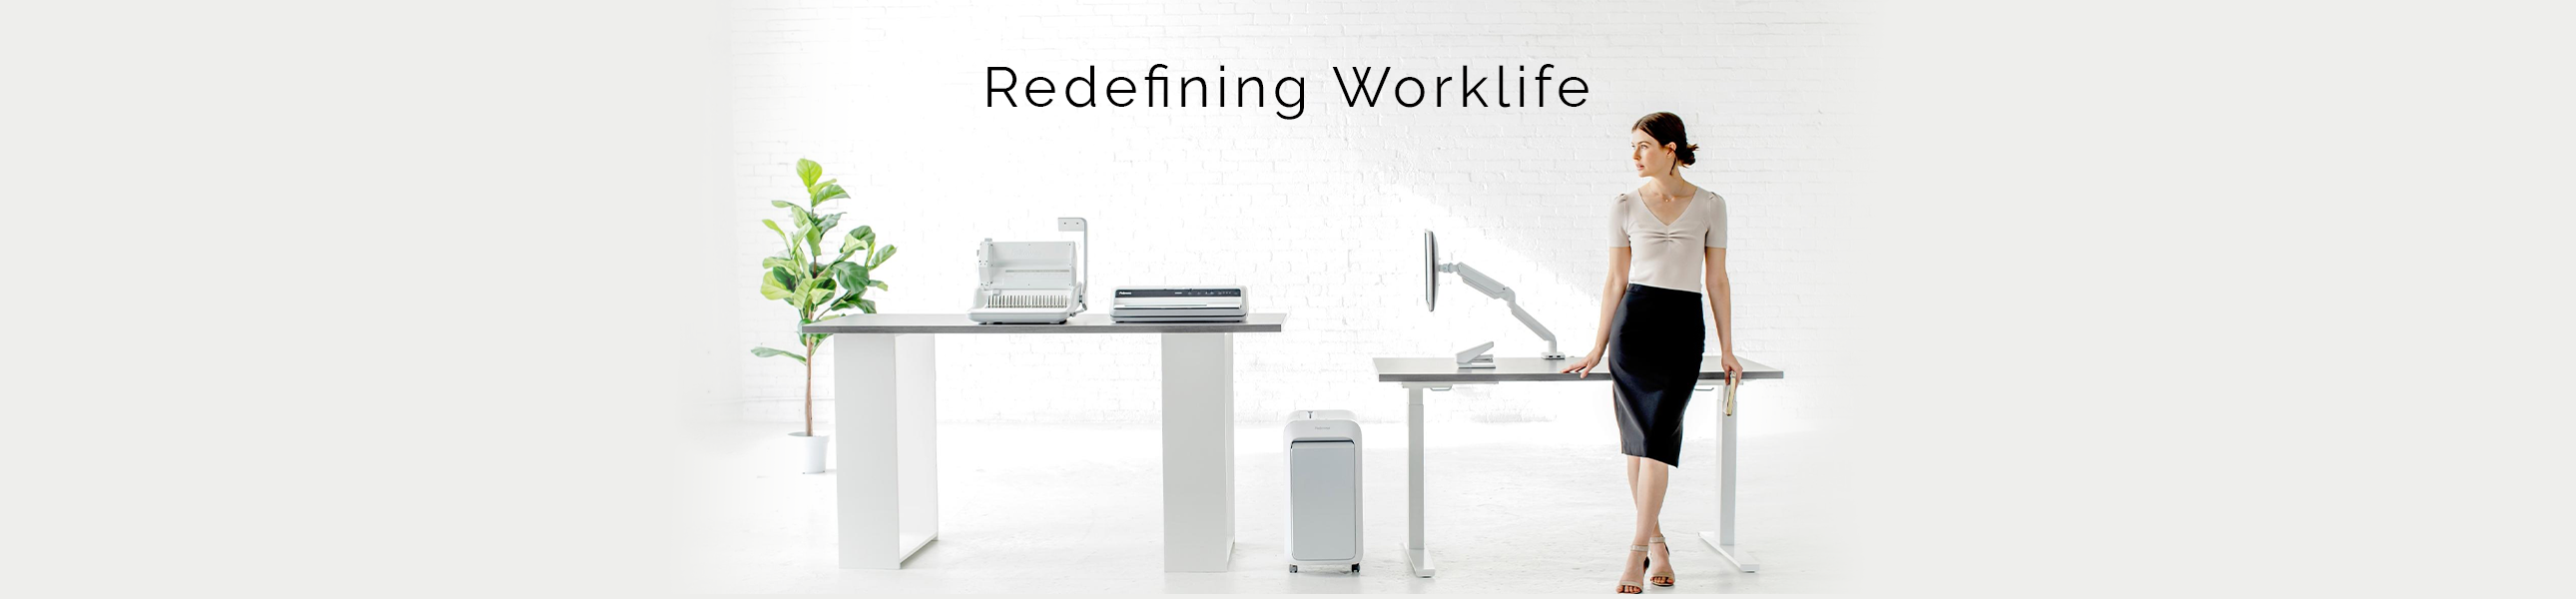 Redefining Worklife